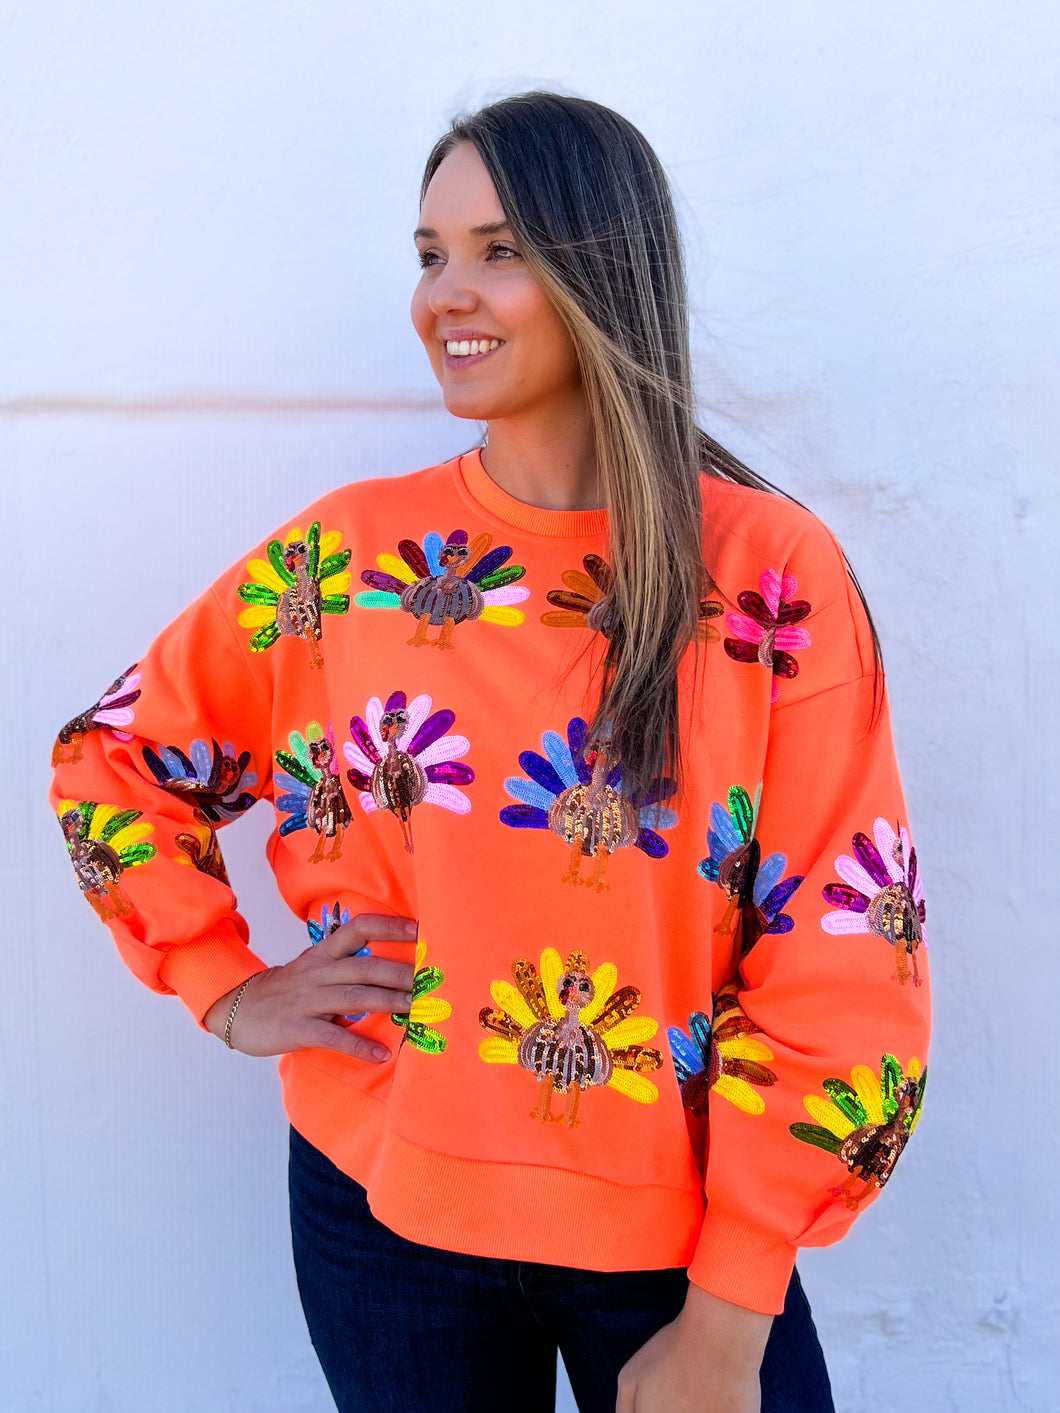 Queen of Sparkles: Neon Orange Turkey Sweatshirt